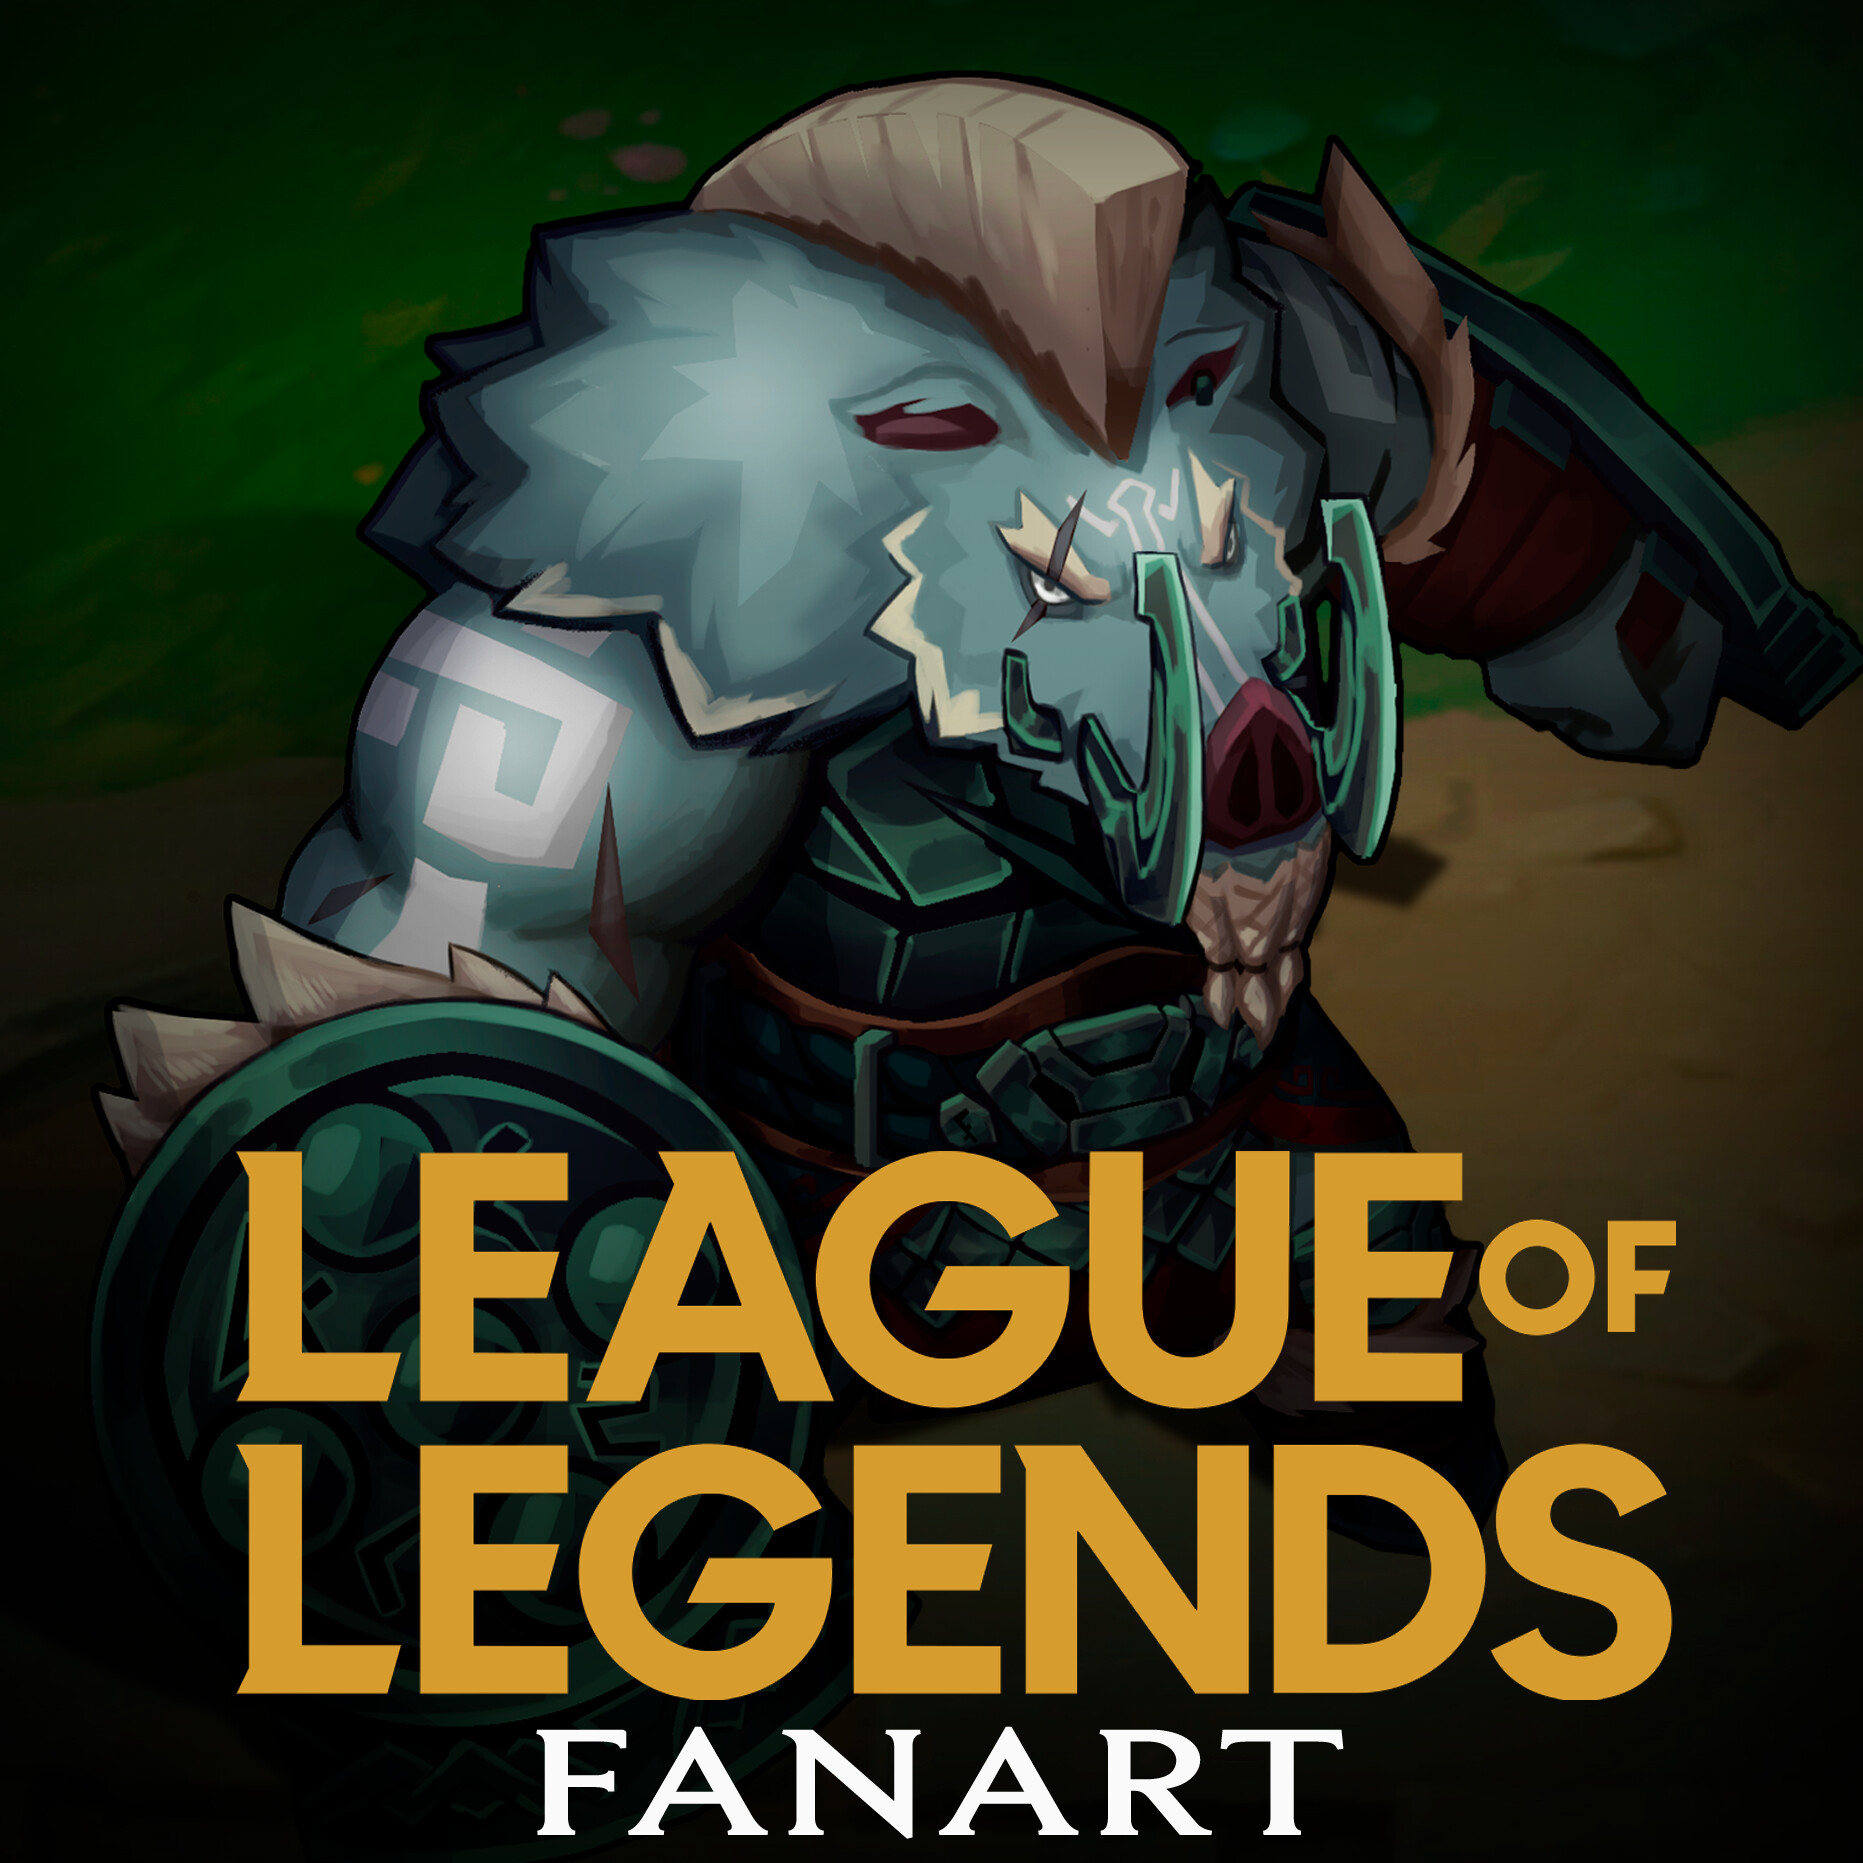 ArtStation - Ildhaurg: The Warden of Sacrifice (League of Legends fanart)